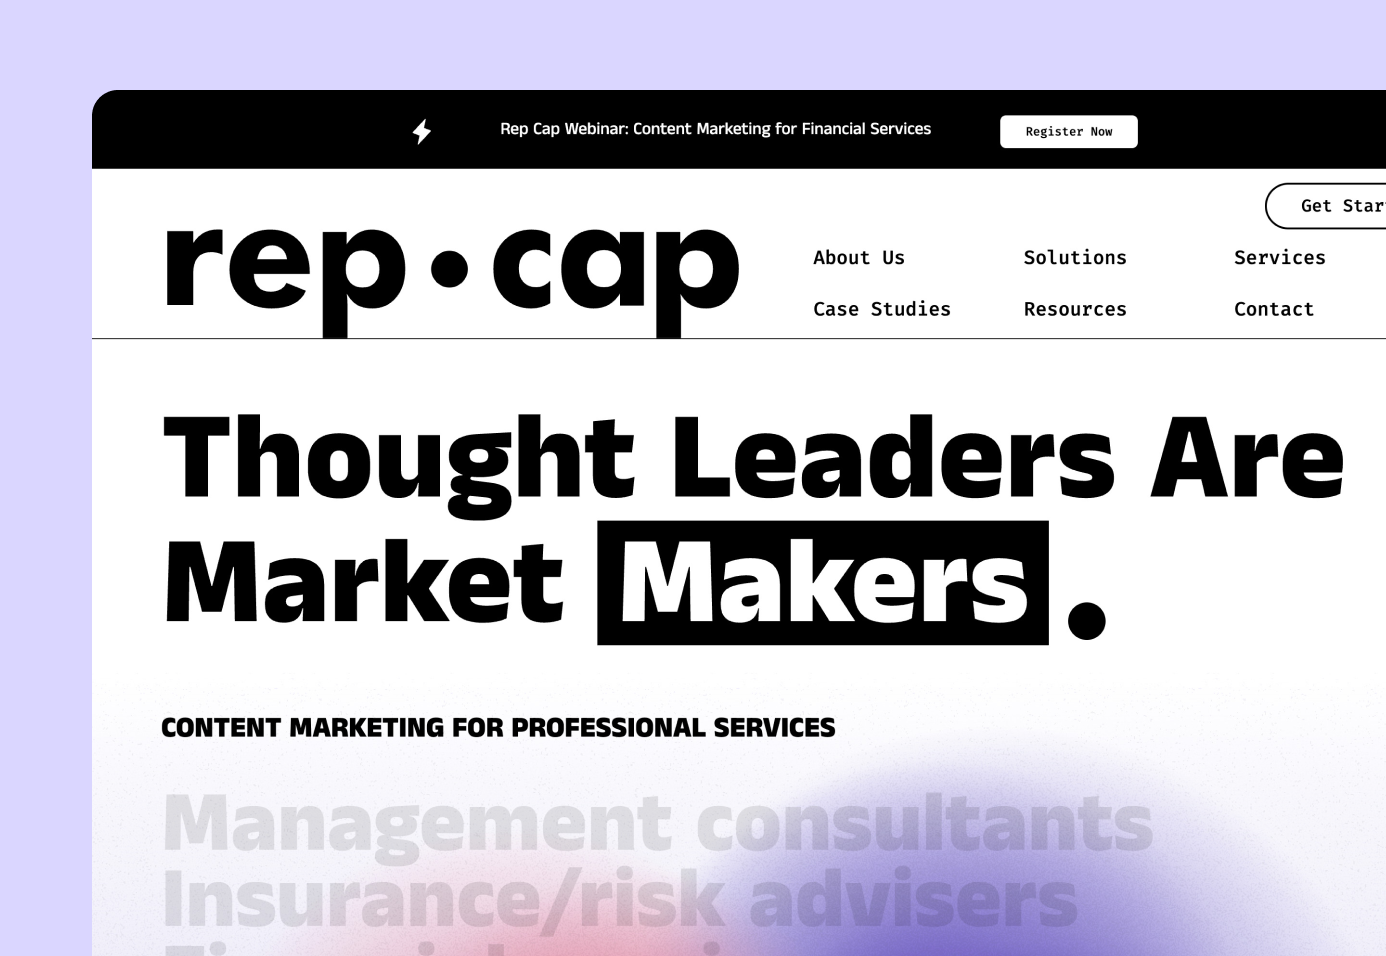 The Rep Cap homepage